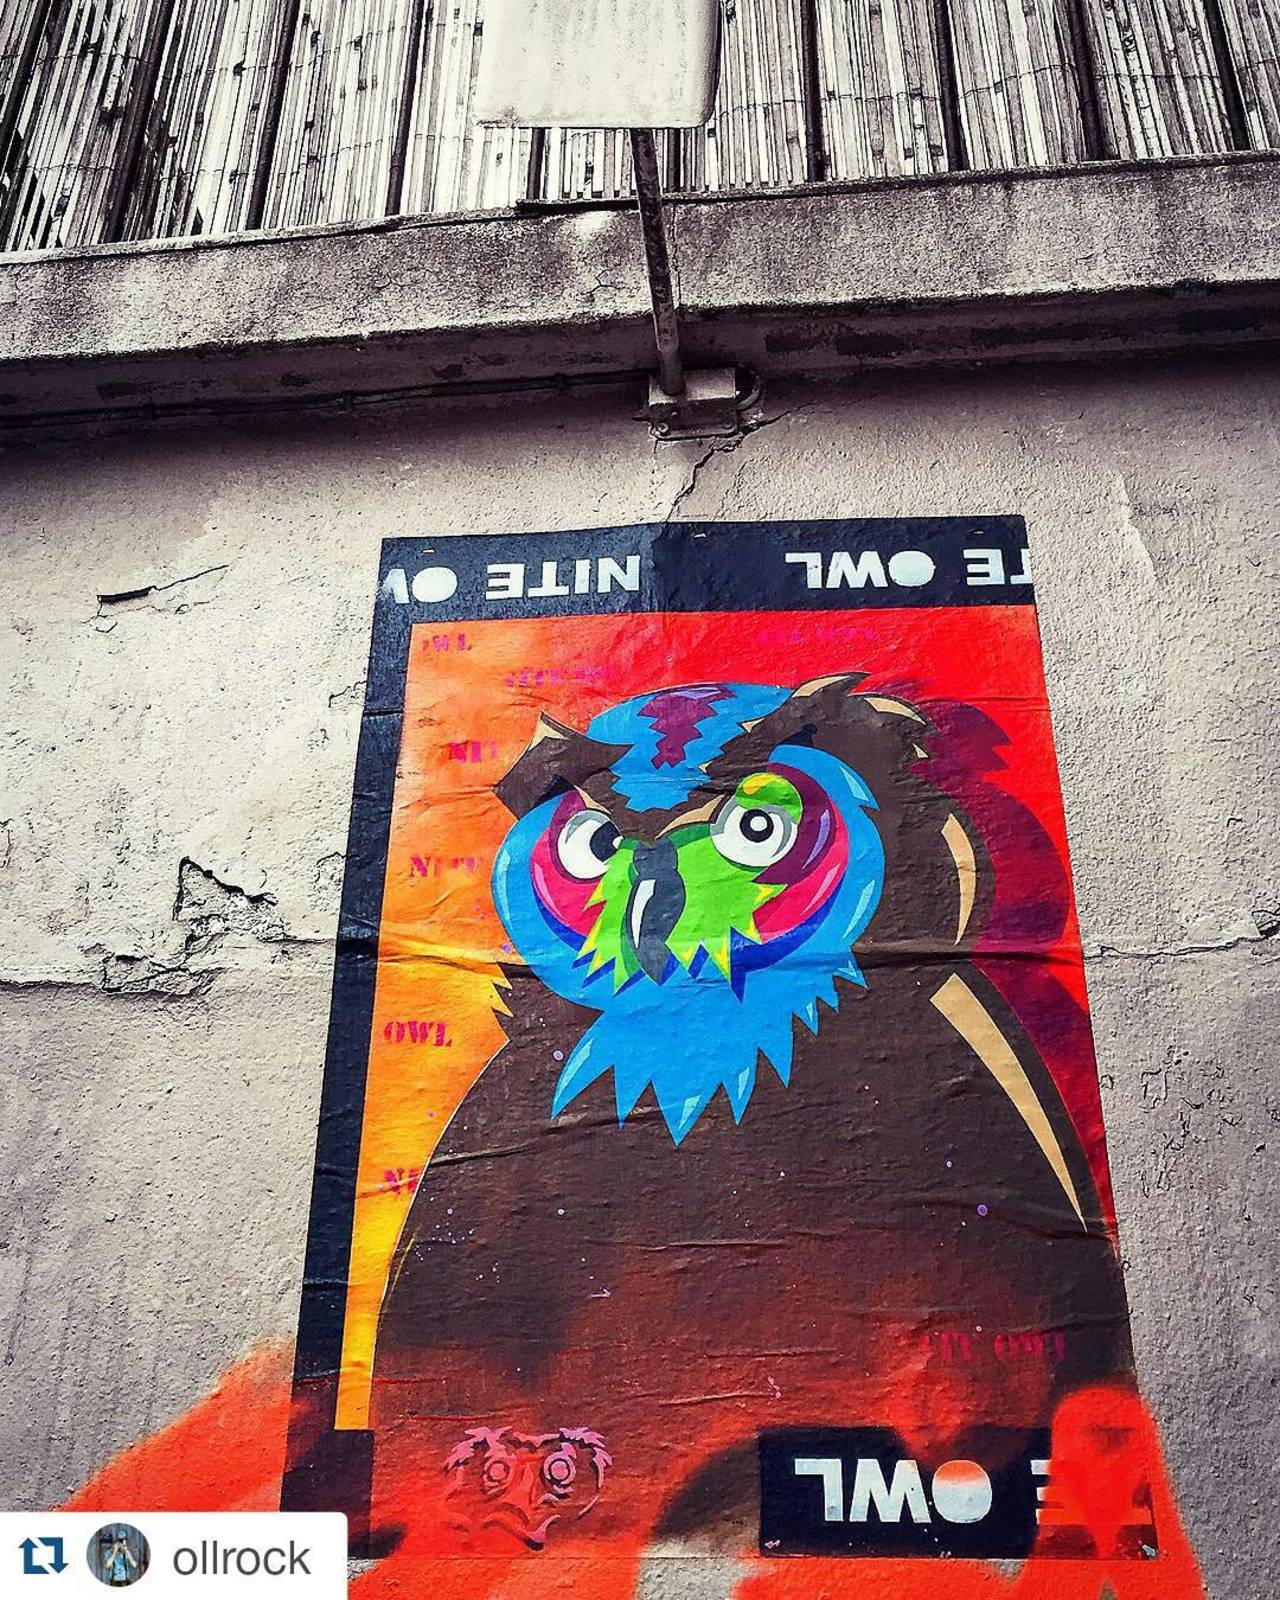 #Paris #graffiti photo by @naito_oru http://ift.tt/1PR5zeJ #StreetArt https://t.co/AgMzUUnFBF